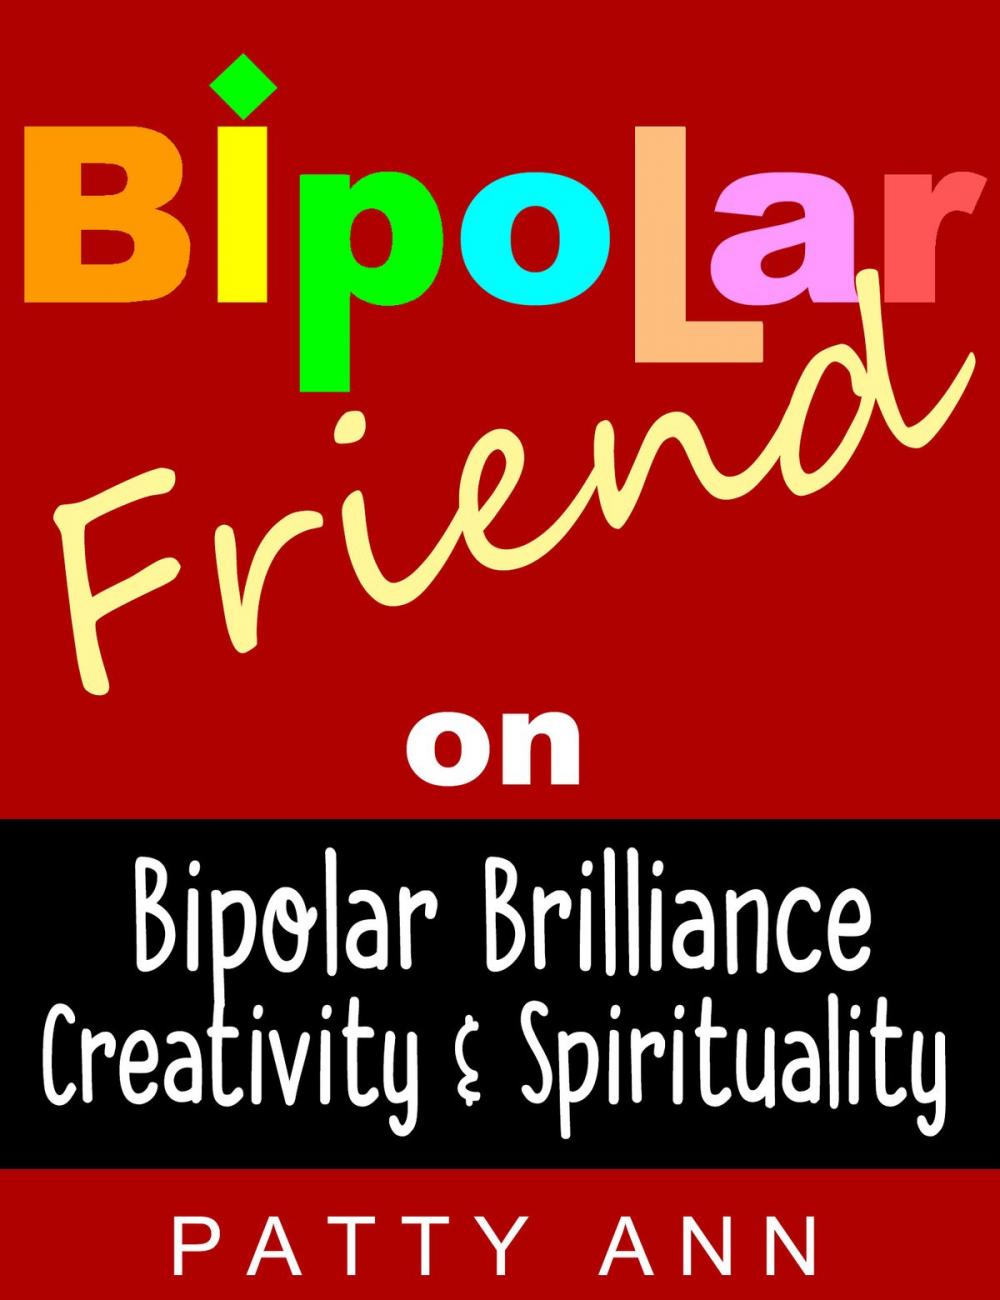 Big bigCover of Bipolar Friend on Bipolar Brilliance, Creativity & Spirituality